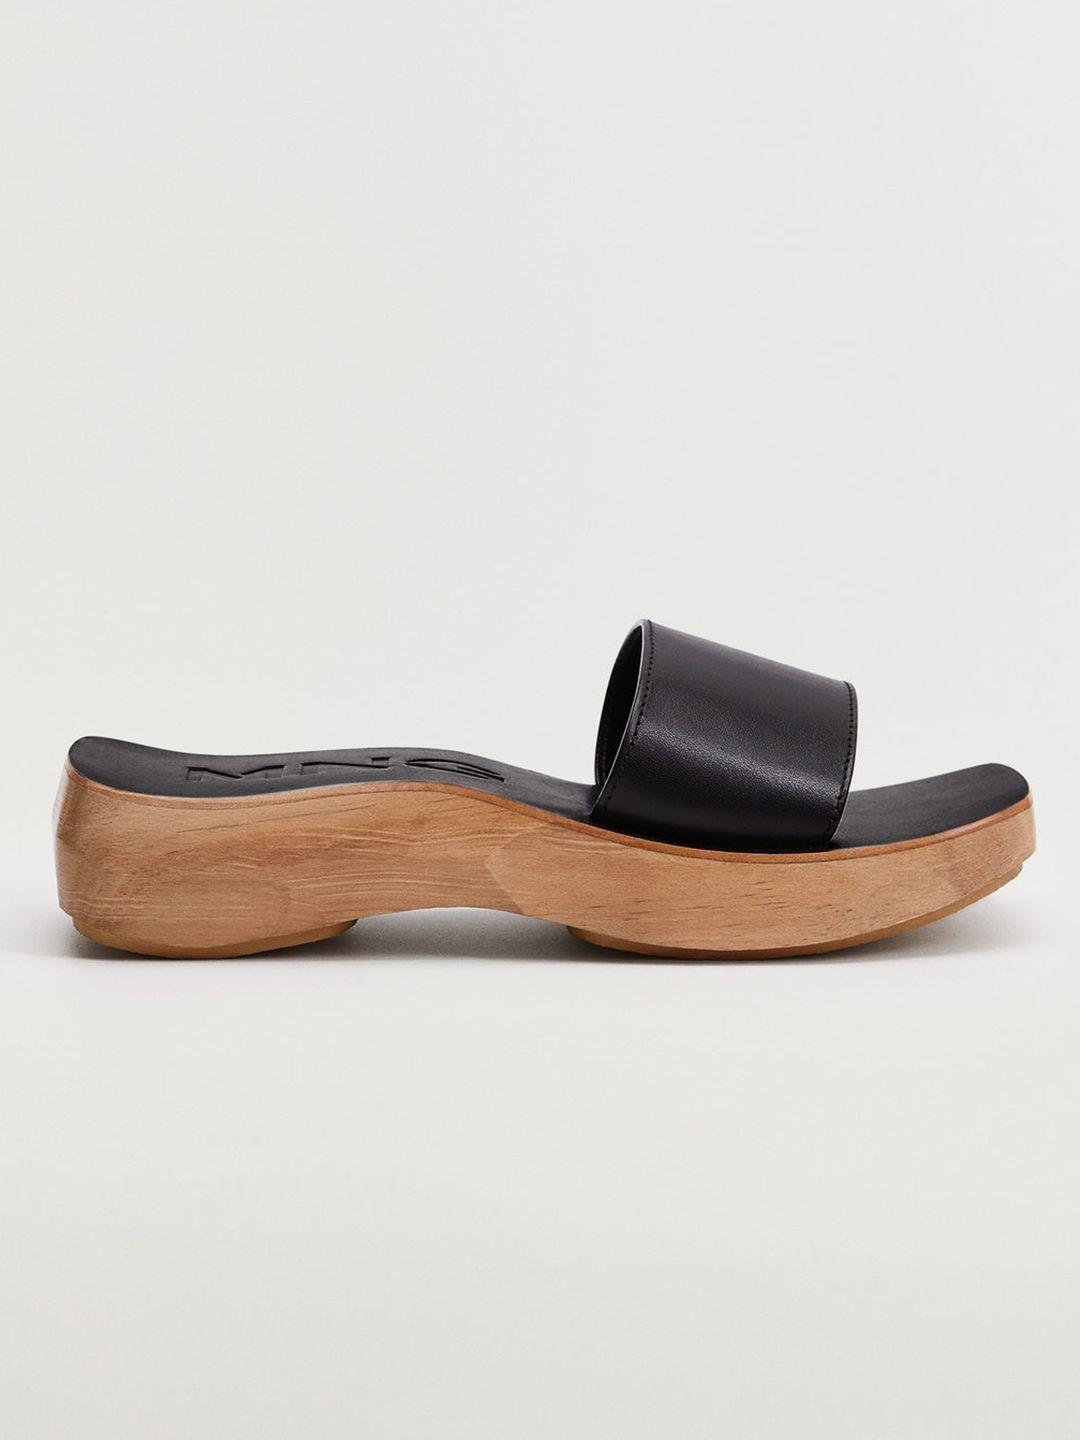 mango-women-black-leather-wood-style-platform-heels